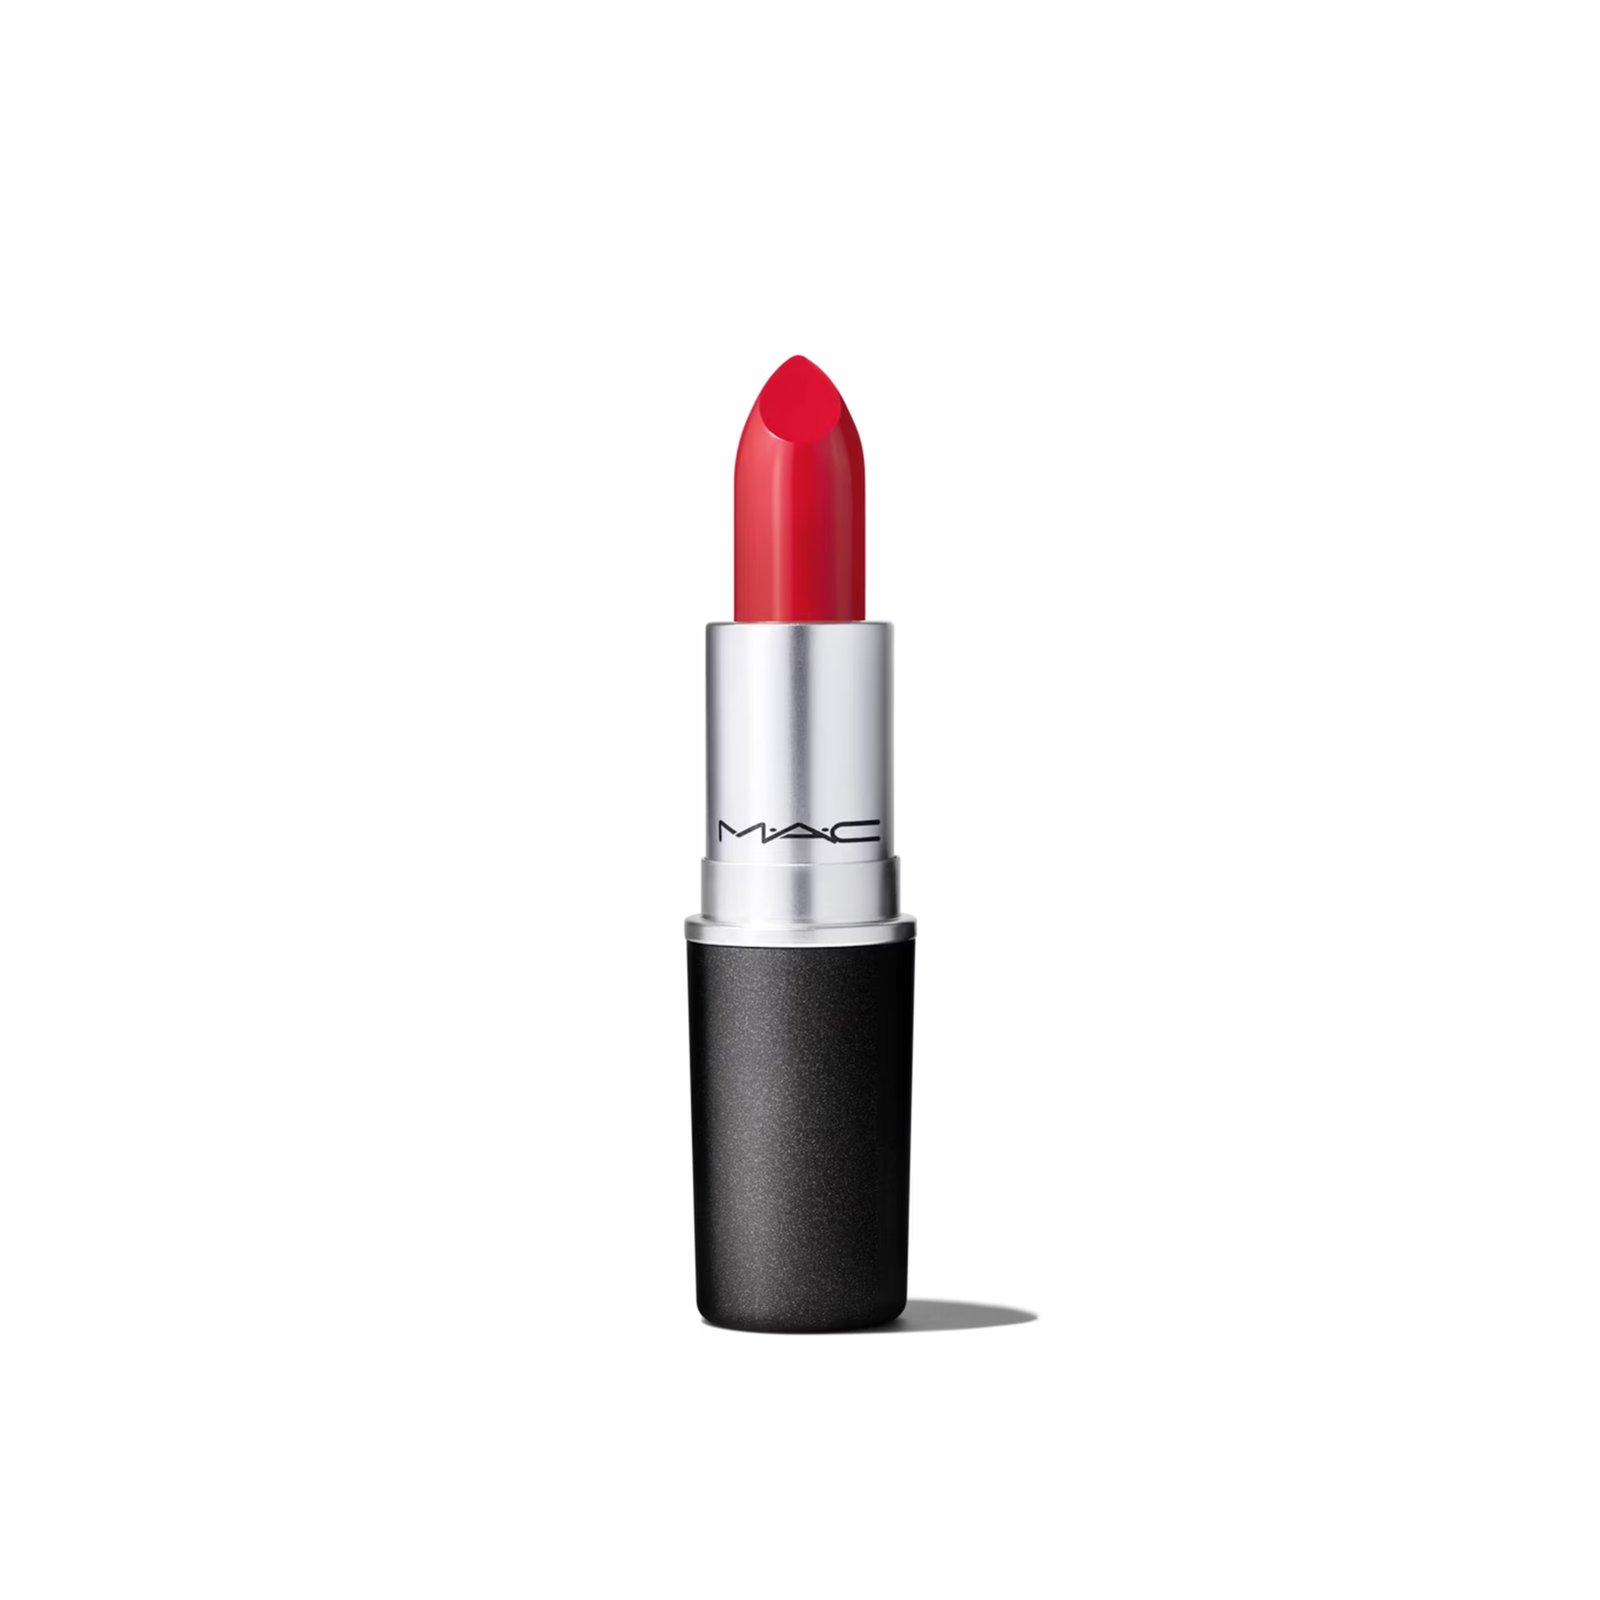 M.A.C Cosmetics Cremesheen Lipstick 201 Brave Red 3g